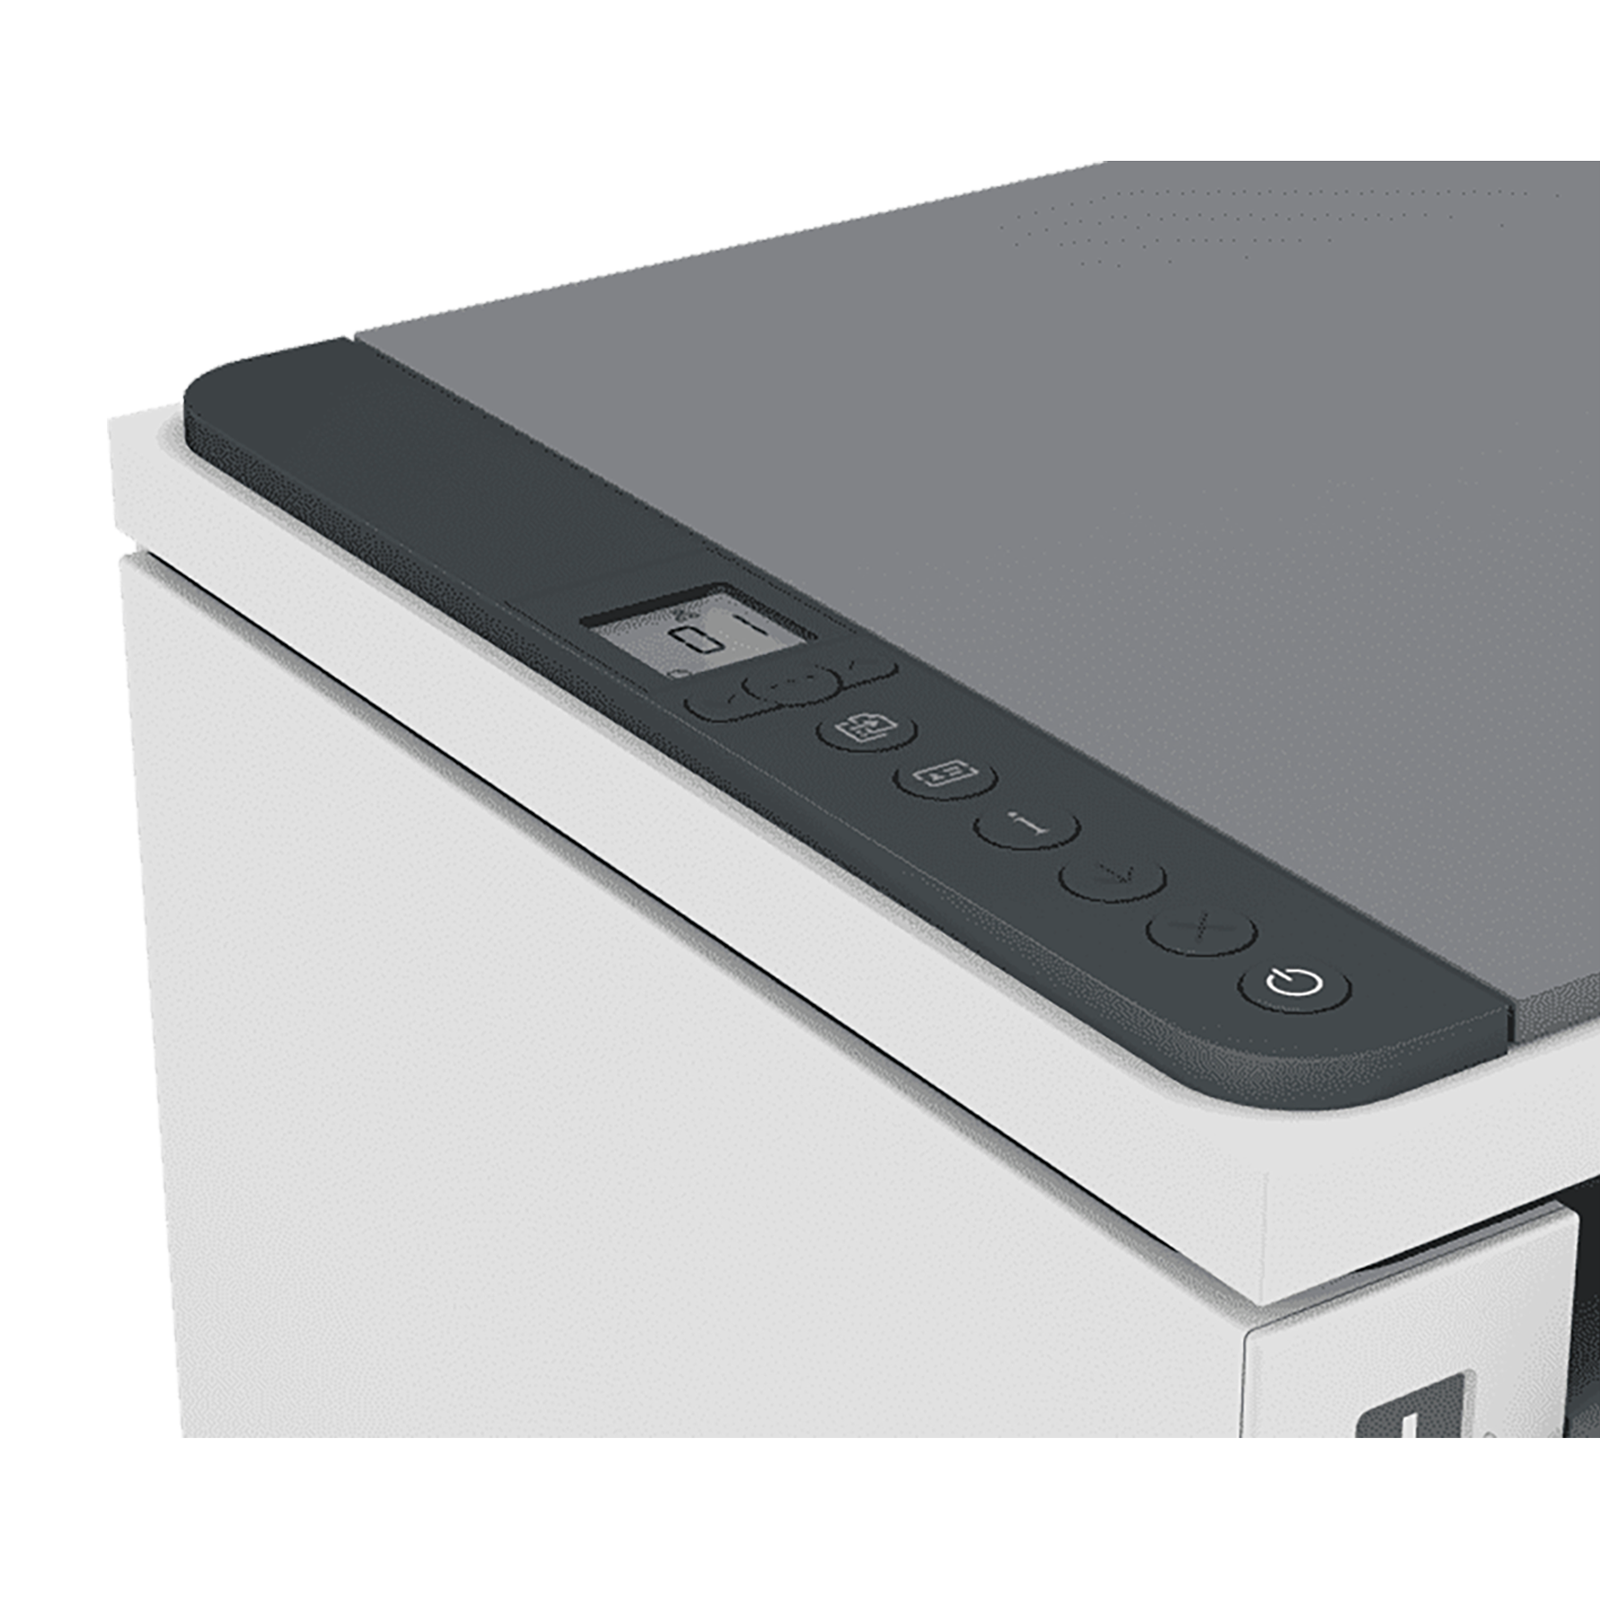 HP Laser Tank 2600 Series Black & White All-in-One Laserjet Printer (Hi-Speed USB, 381U0A, Black/White)_4